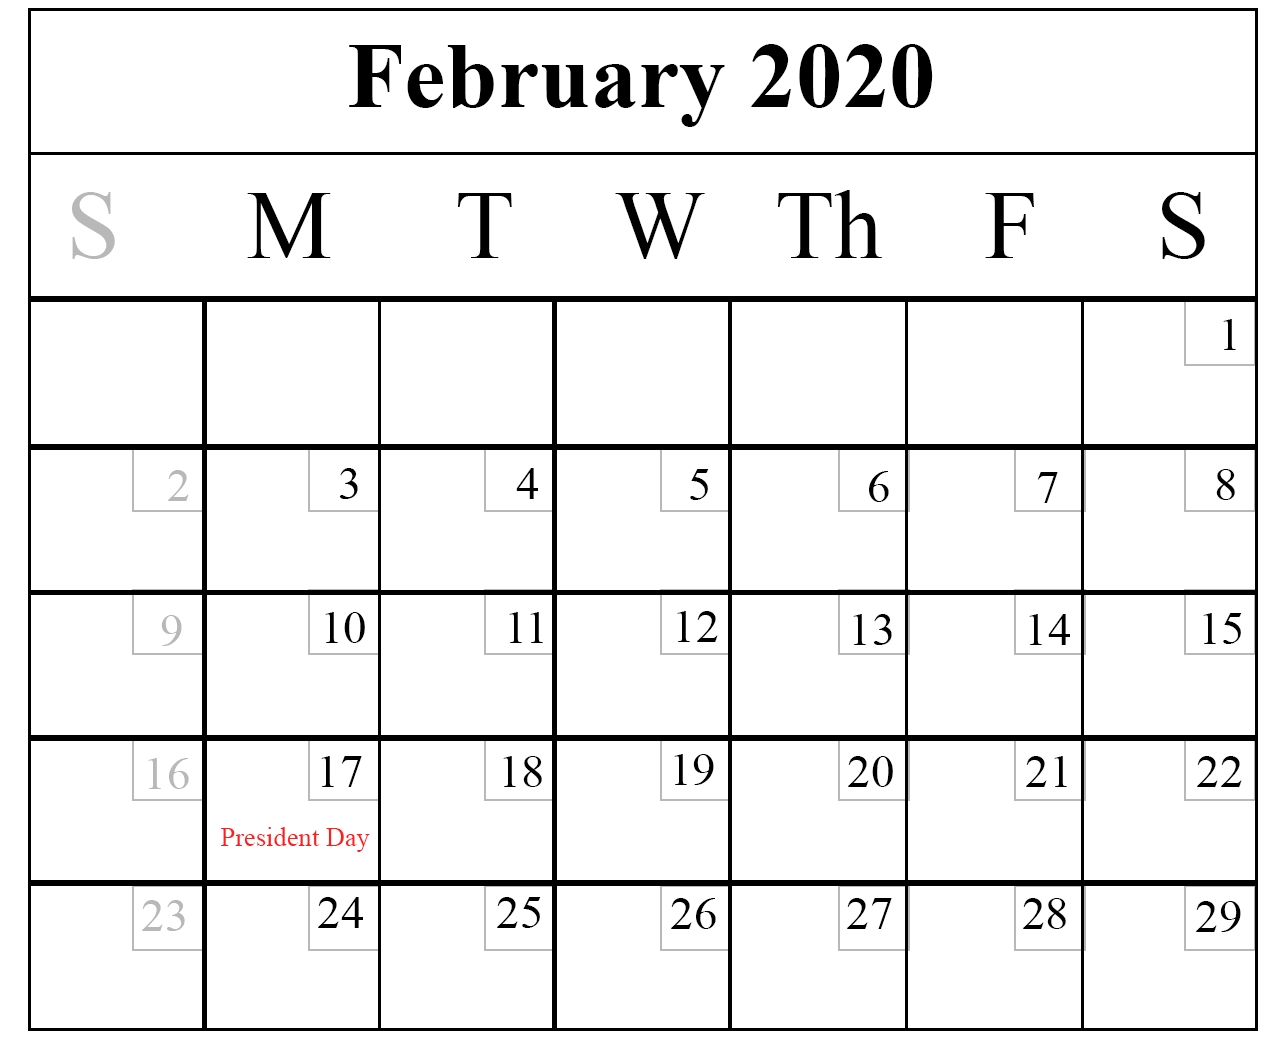 February Calendar 2020 Free Printable Template Pdf Word Perky Feb 2 2020 Calendar